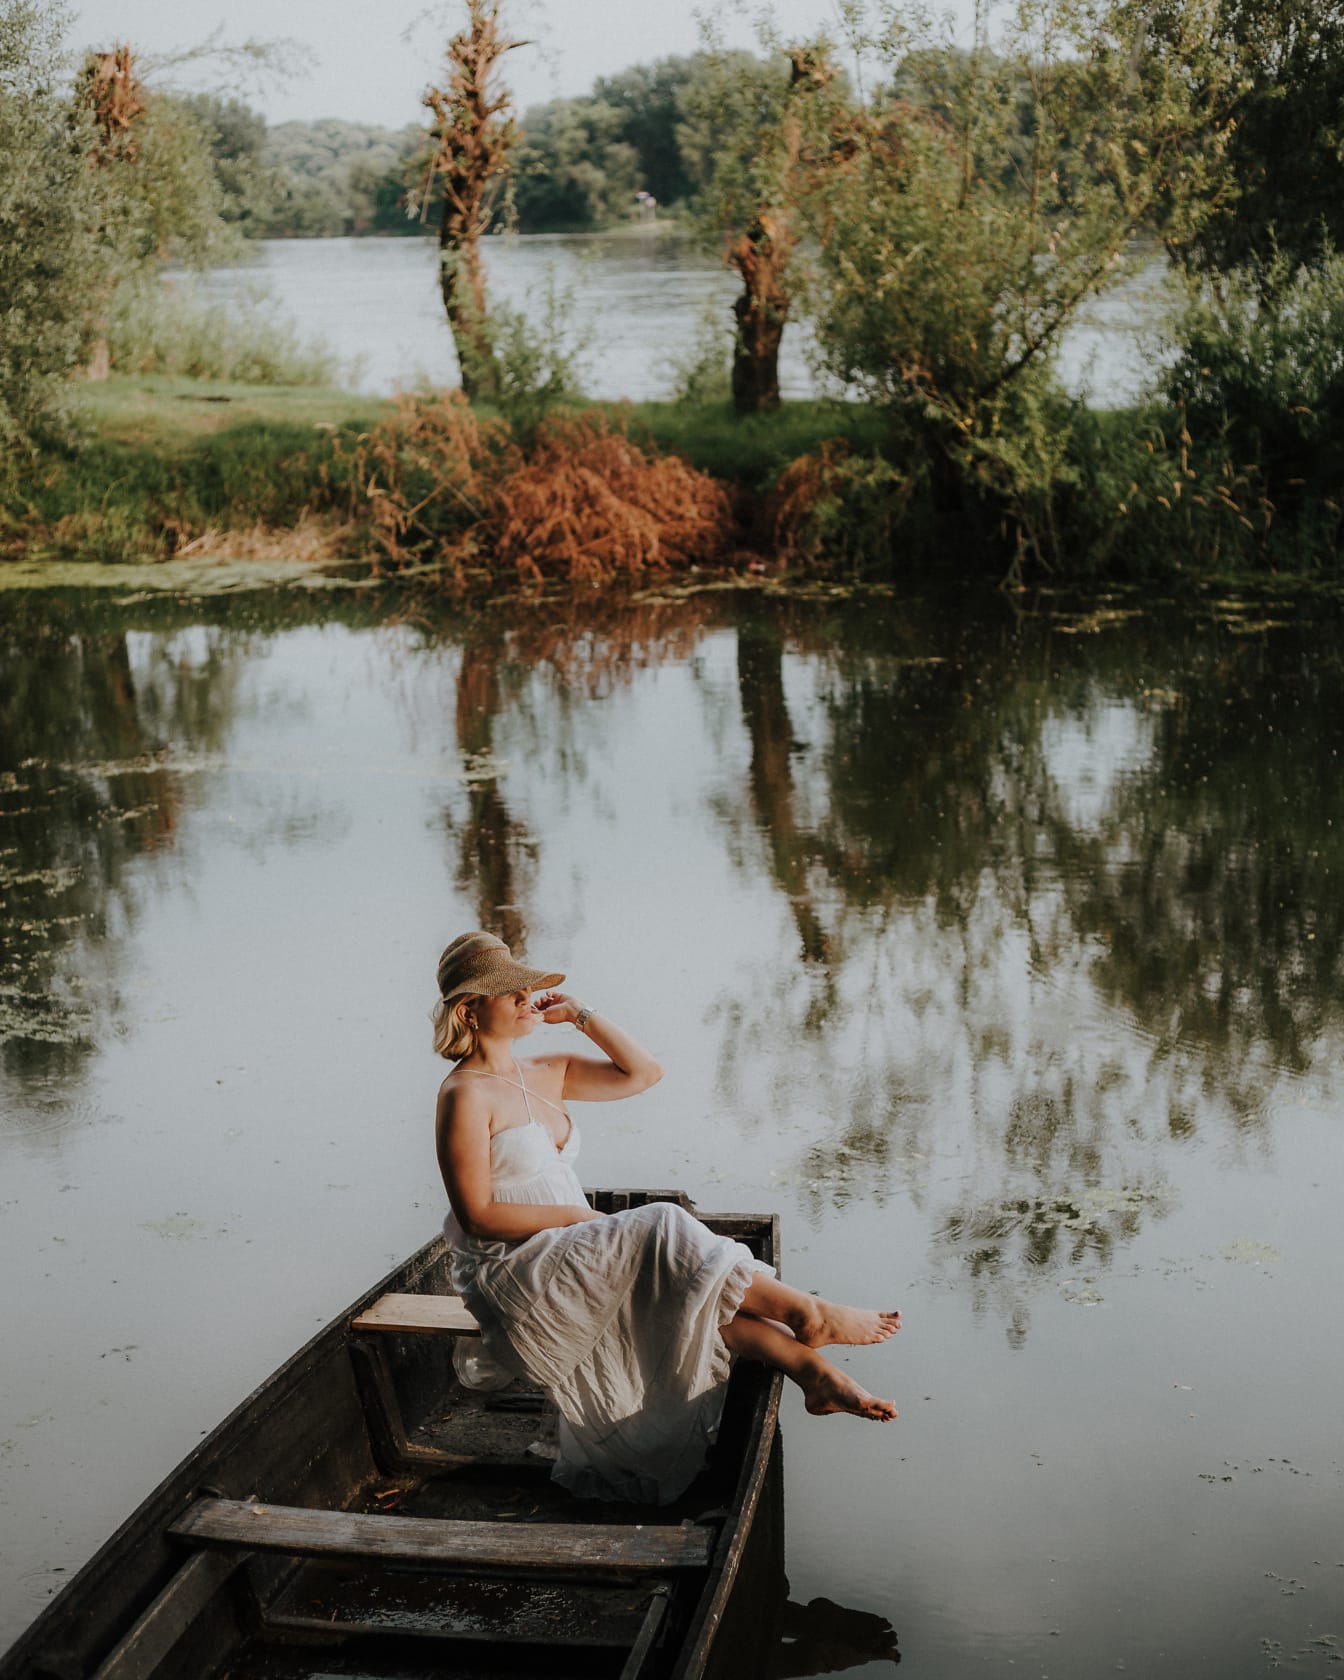 Elegant woman posing in dress sitting in boat